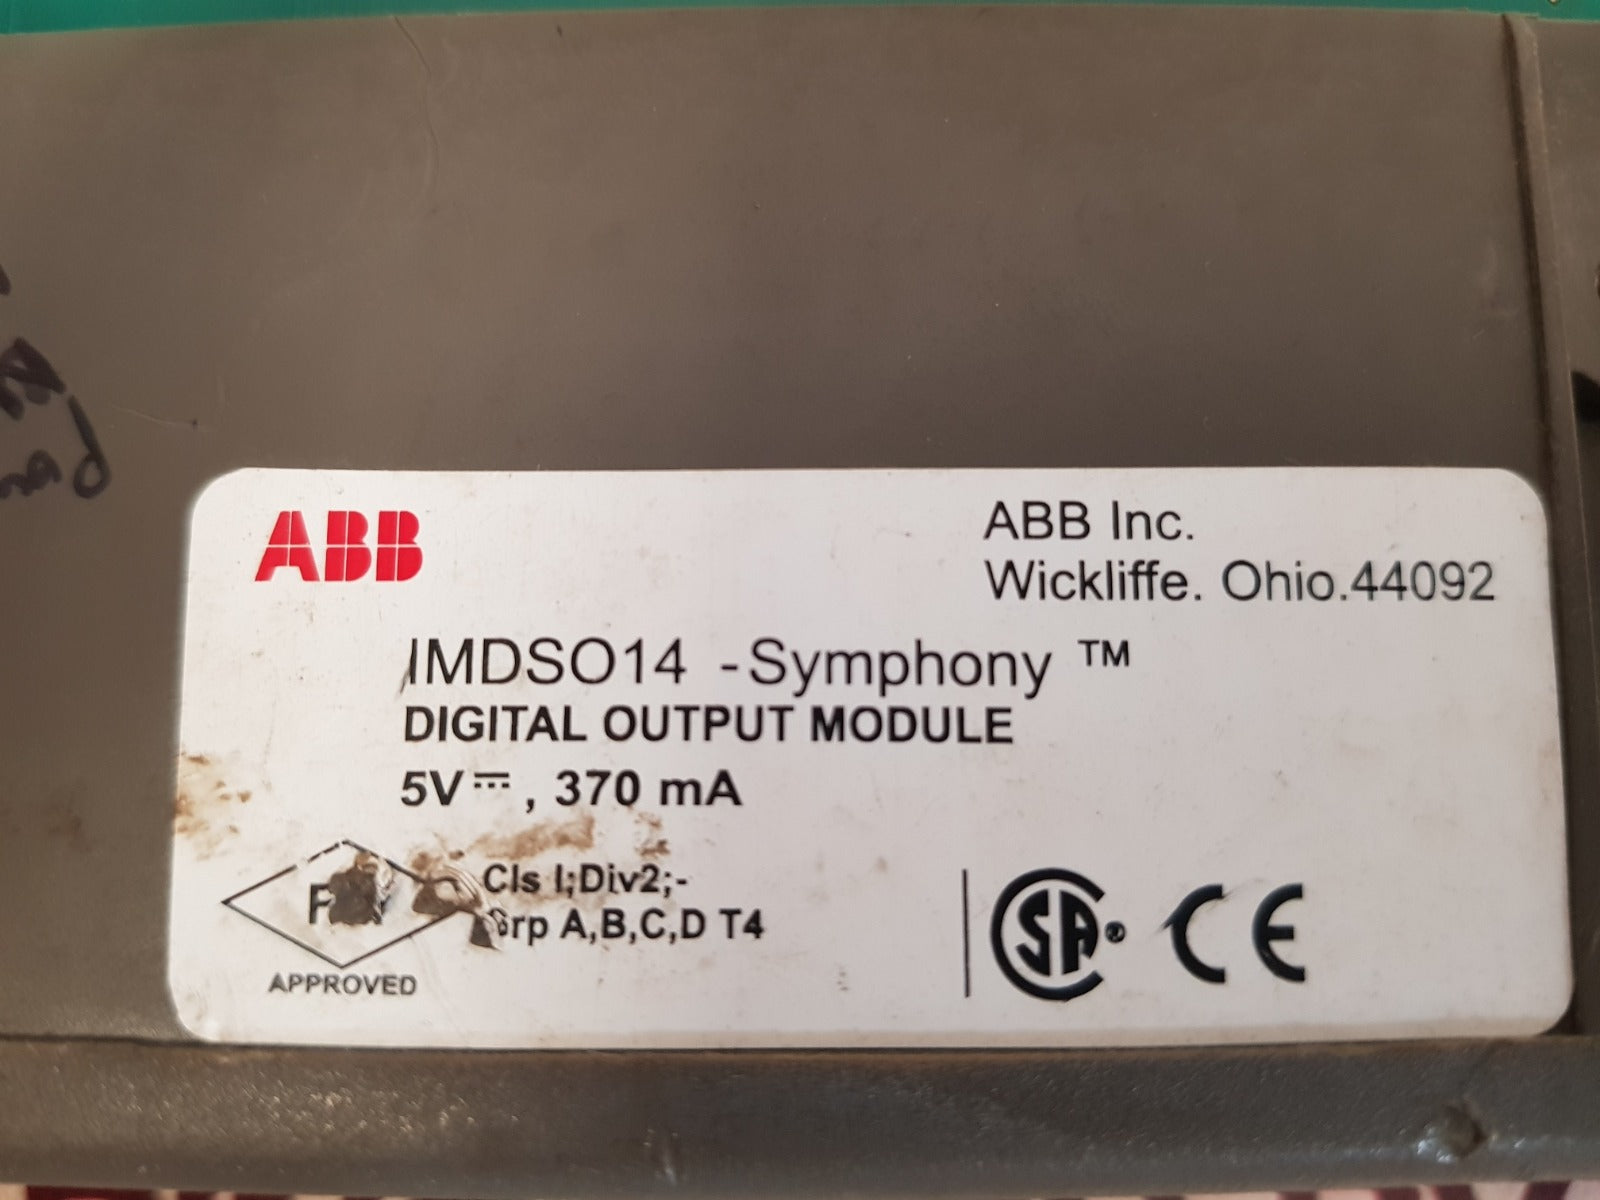 Abb imdso14-symphony digital output module used